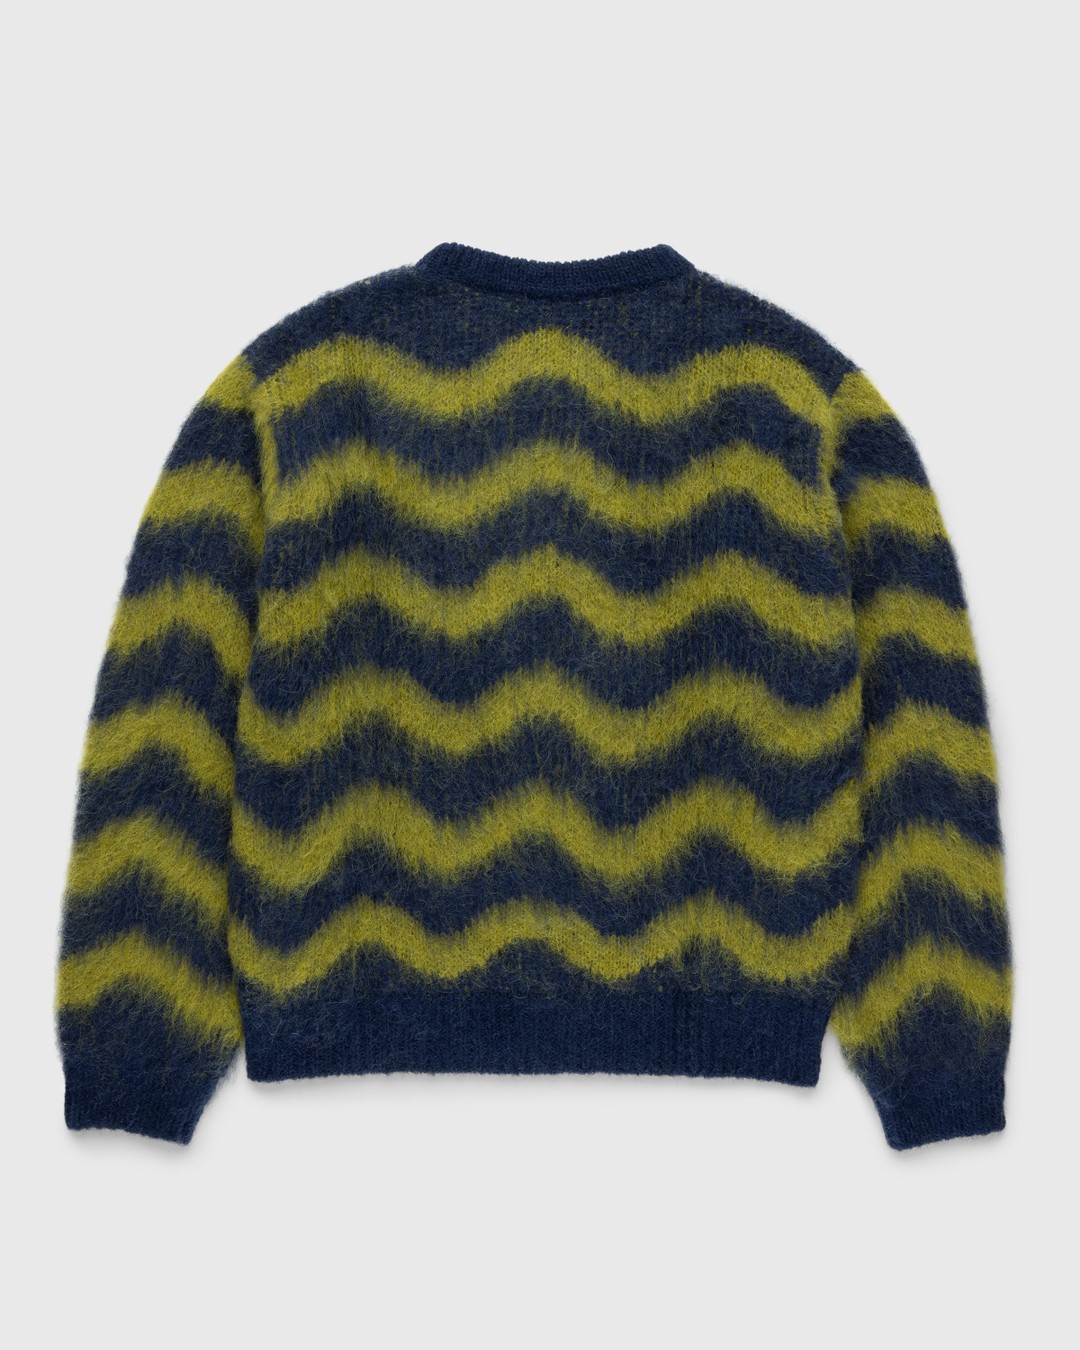 Highsnobiety HS05 – Alpaca Fuzzy Wave Sweater Navy/Olive Green - Knitwear - Multi - Image 2